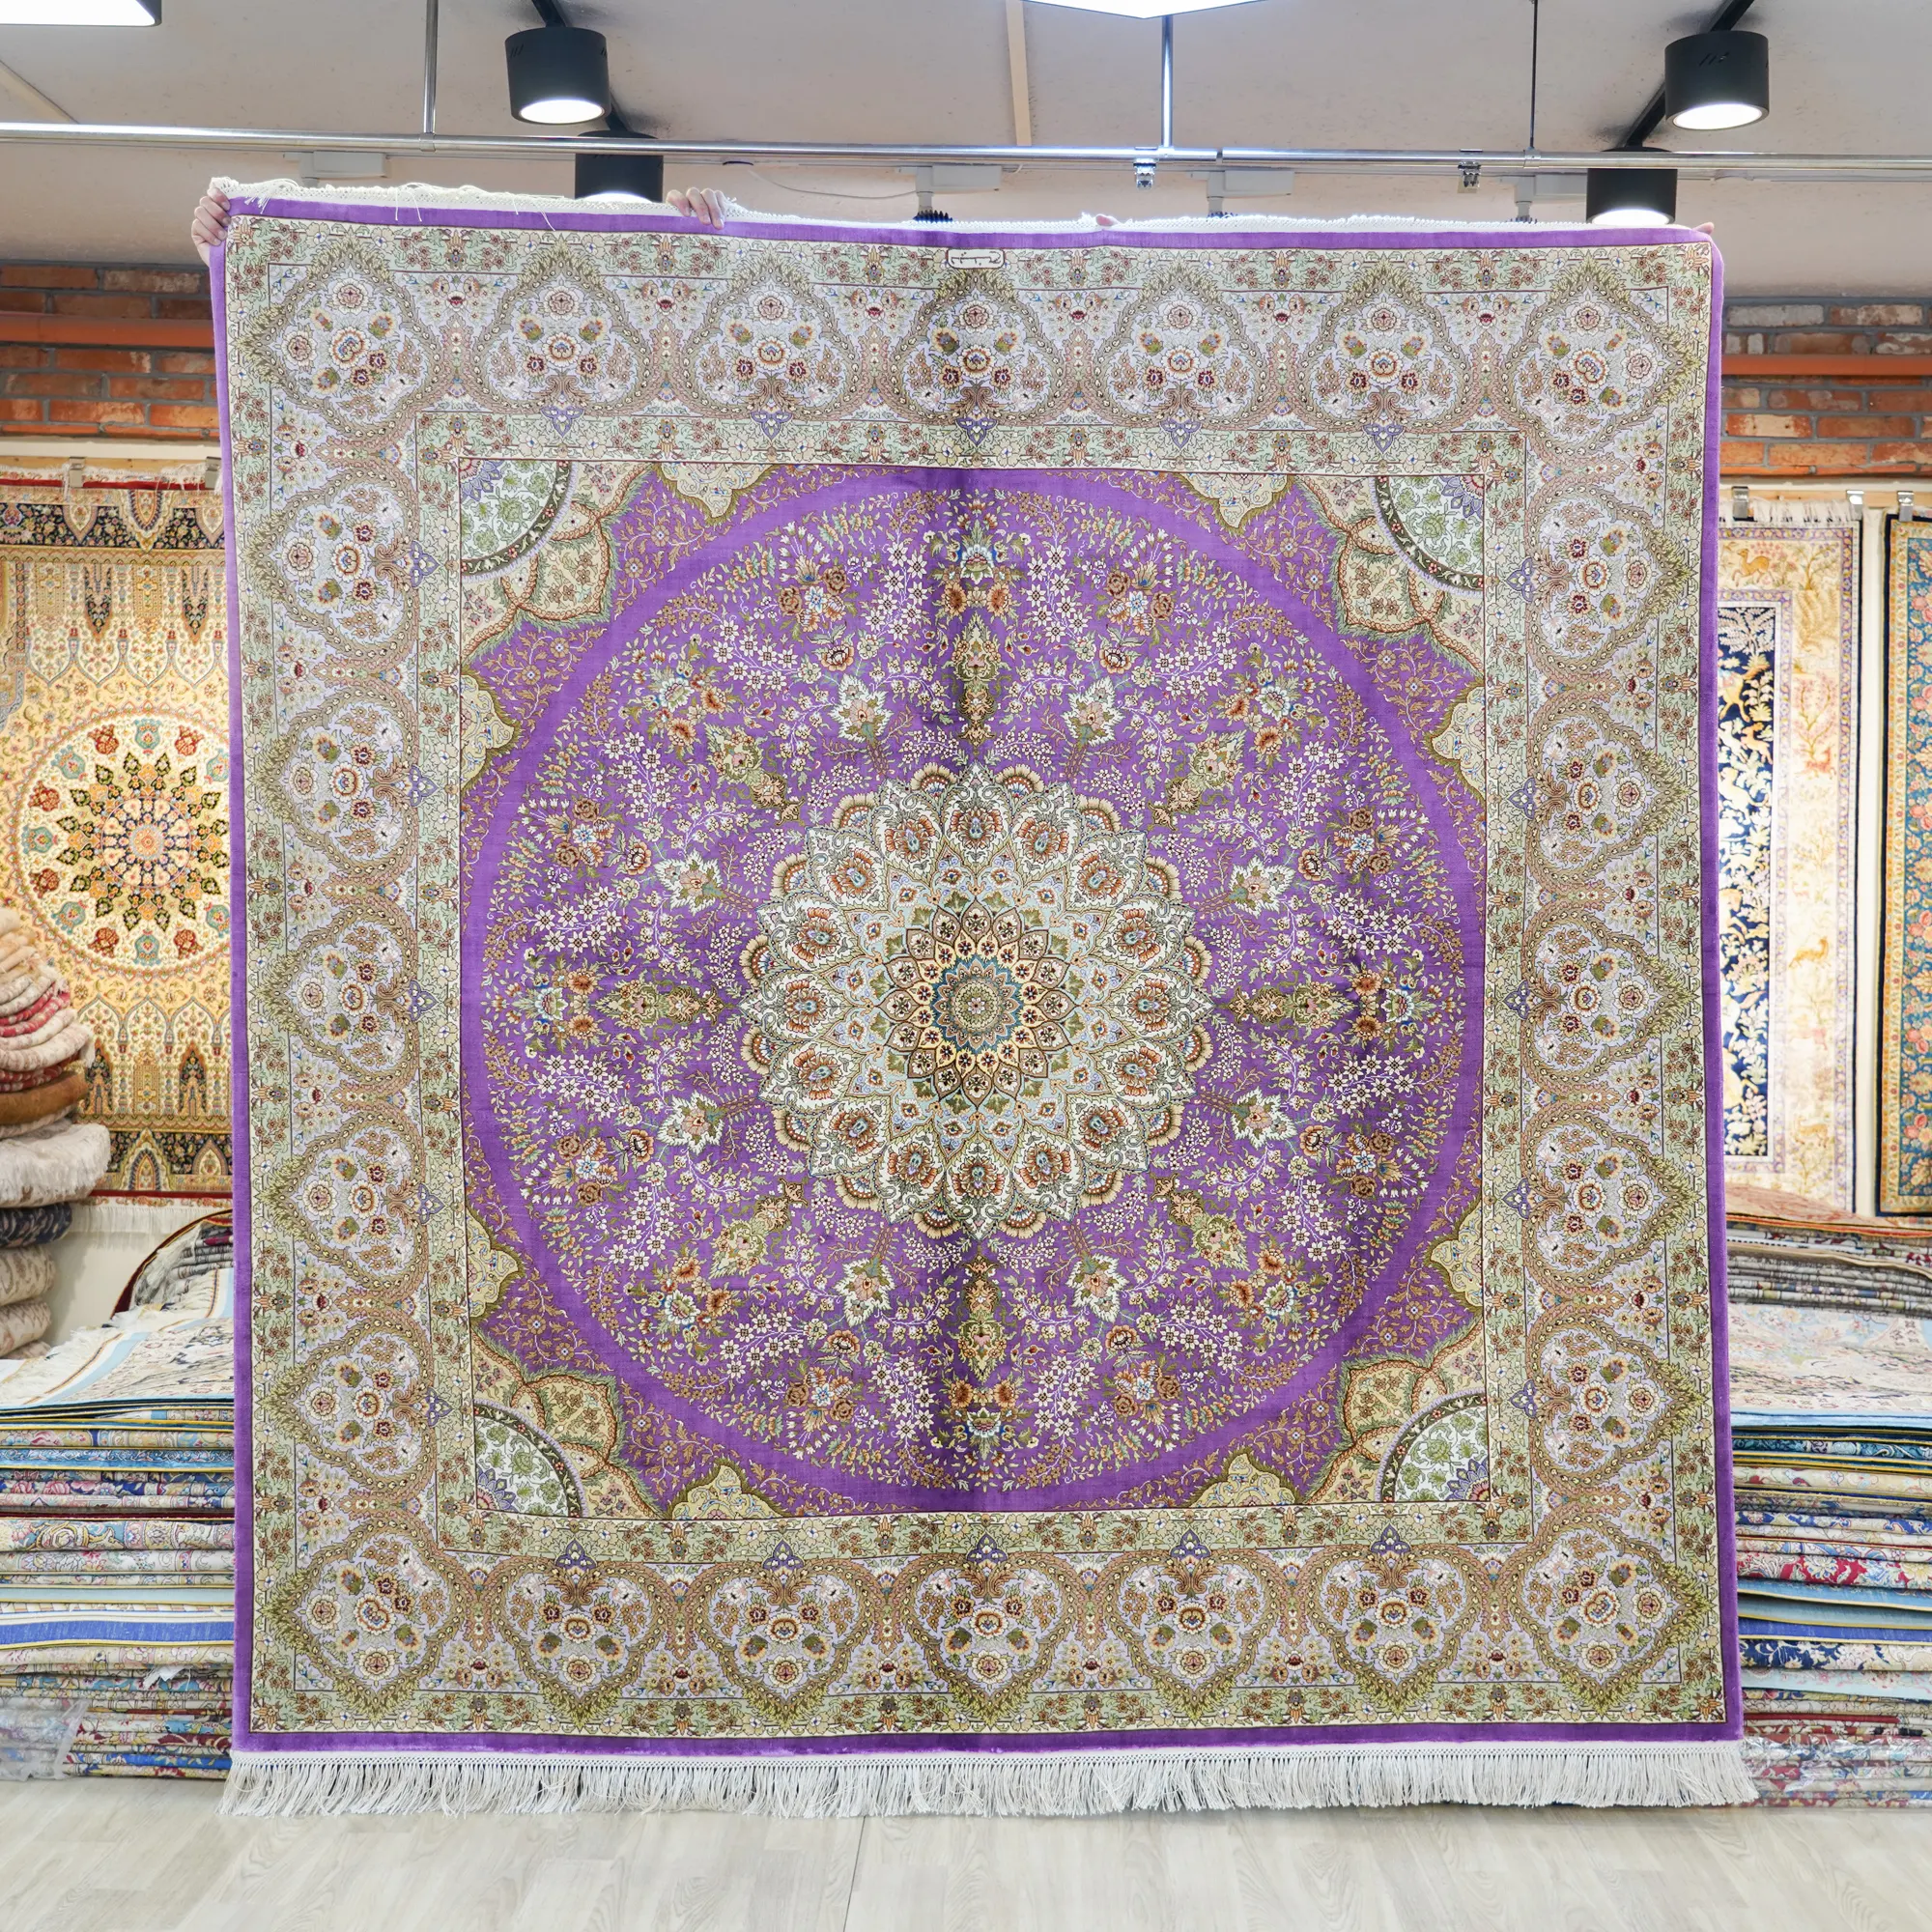 213x213cm Handmade Carpets Hand Knotted Persian Silk Rugs Turkish Living Room